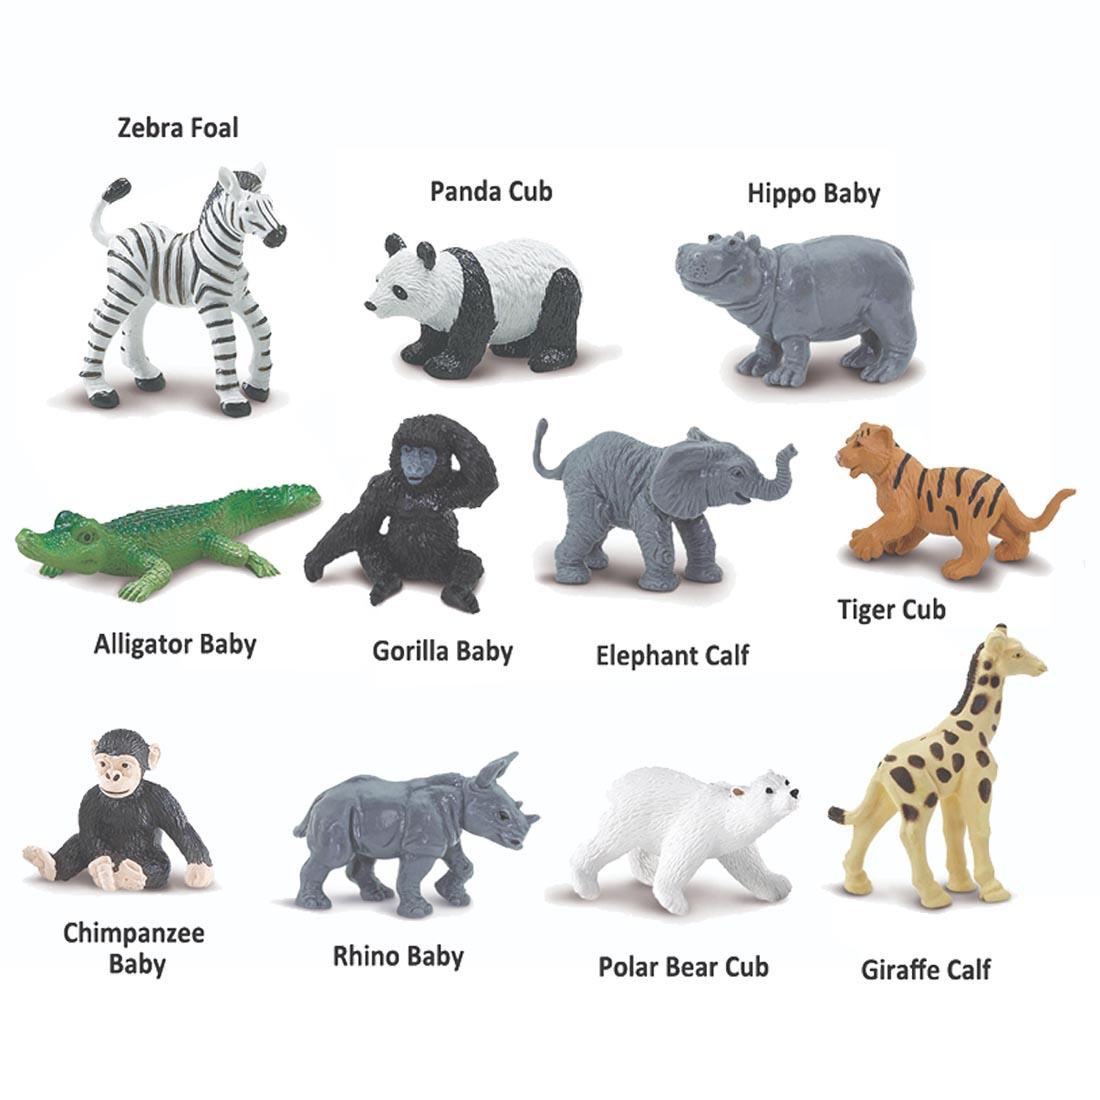 11 creatures from the Zoo Babies Figurine Set labeled with their names: zebra foal, panda cub, hippo, alligator, gorilla, elephant calf, tiger cub, chimpanzee, rhino, polar bear cub and giraffe calf